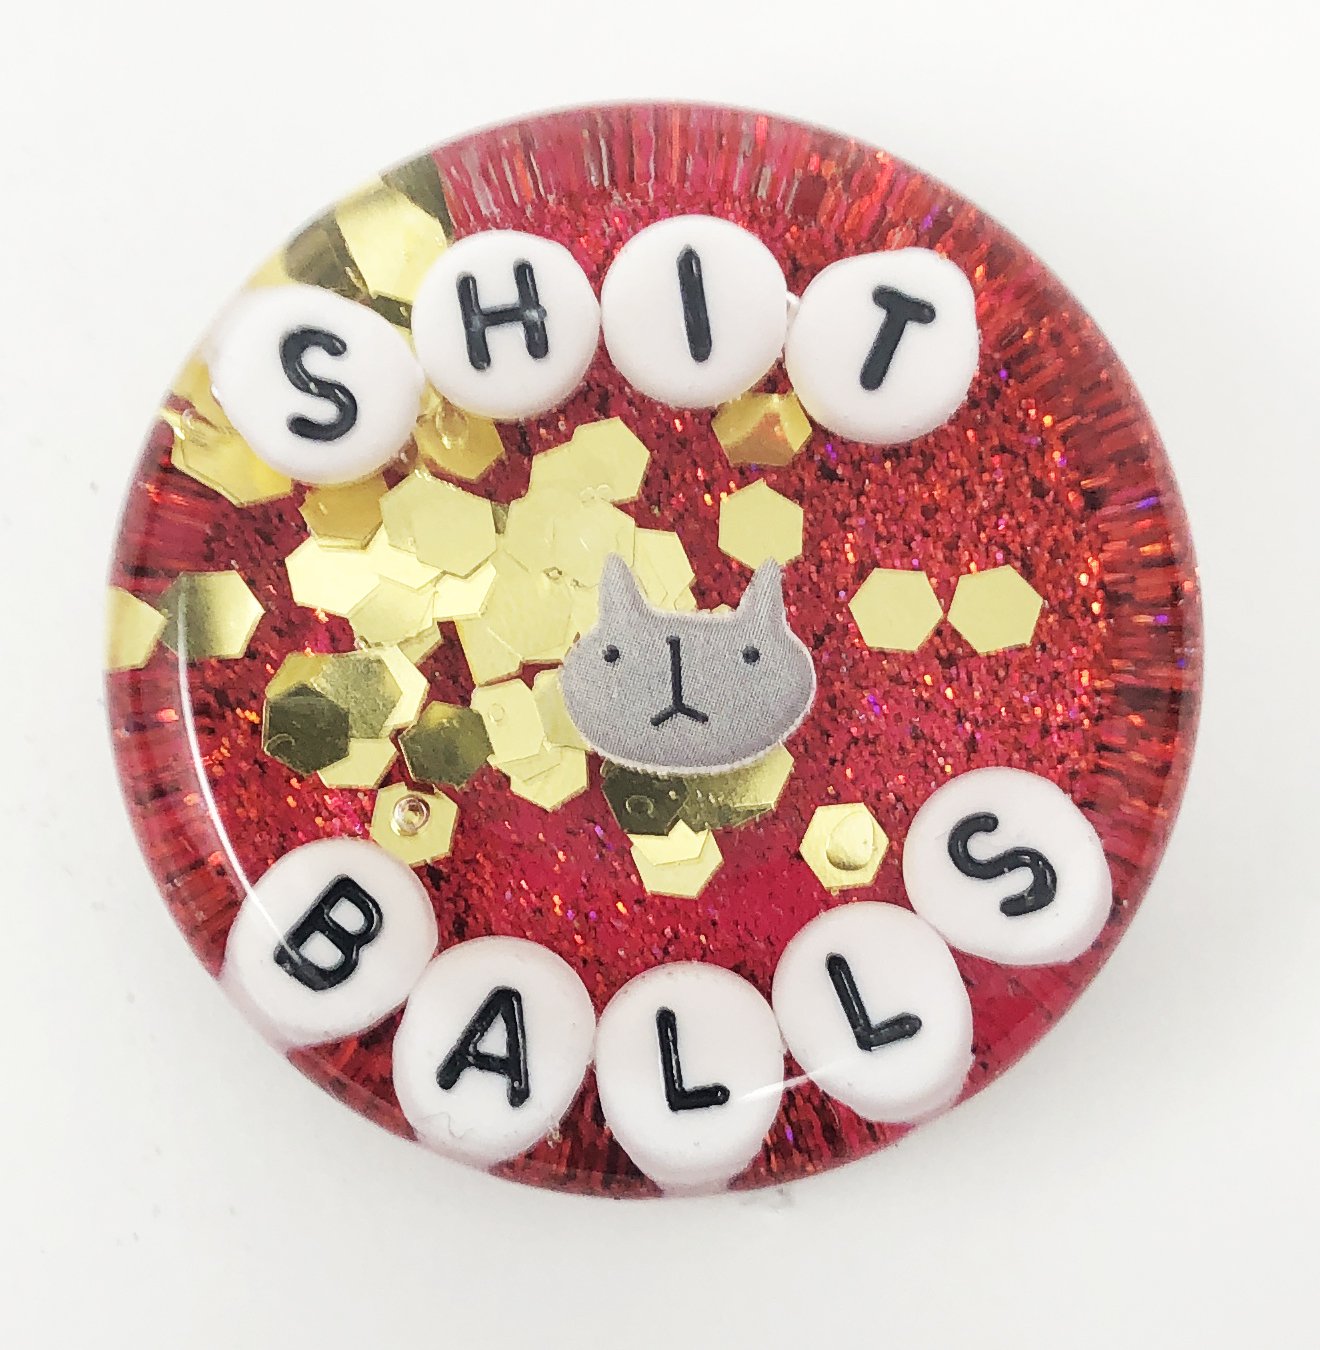 Shit Balls - Shower Art - READY TO SHIP